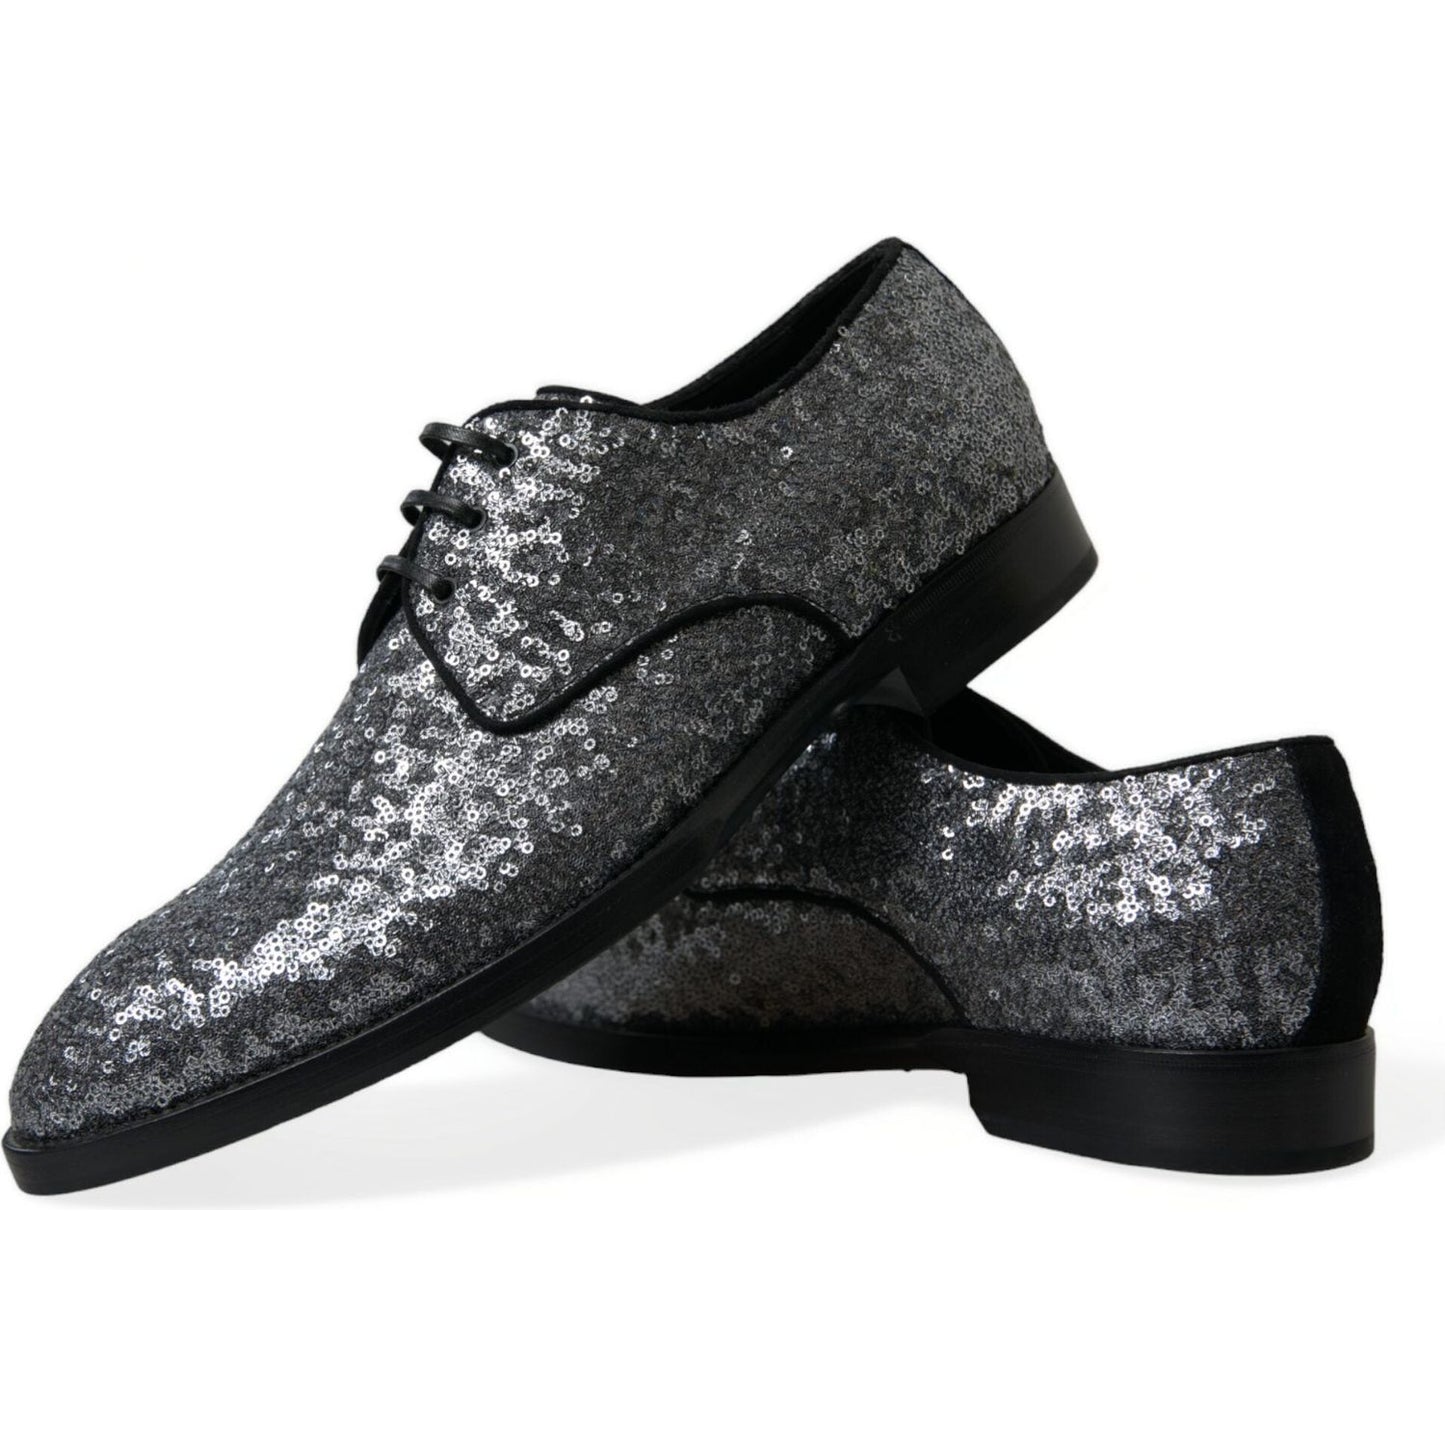 Dolce & Gabbana Exquisite Sequined Derby Dress Shoes silver-sequined-lace-up-men-derby-dress-shoes